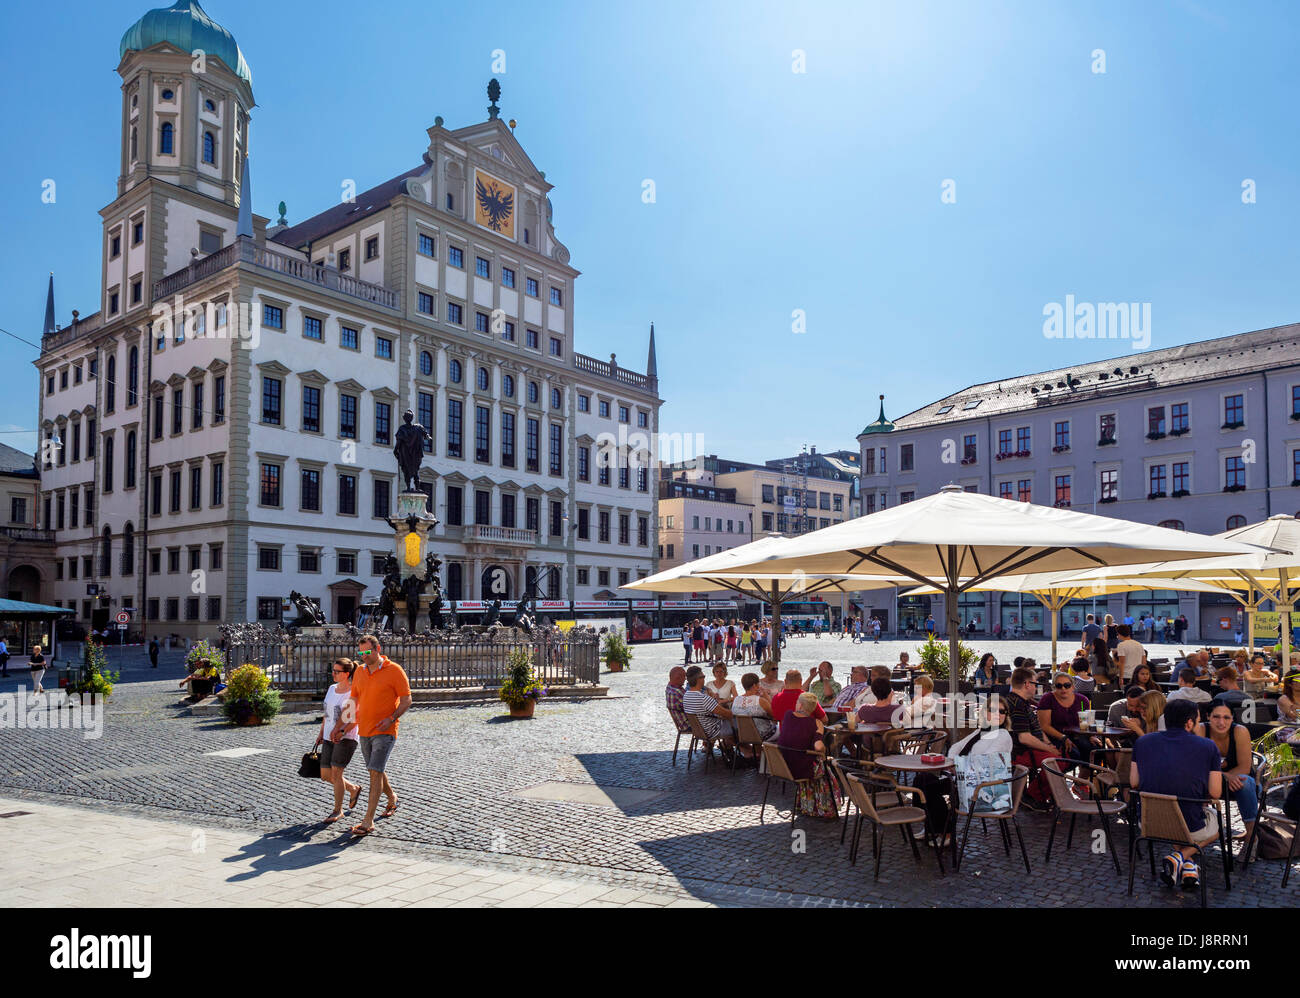 Sidewalk cafe in front of the Town Hall (Rathaus), Rathausplatz, Augsburg, Bavaria, Germany Stock Photo